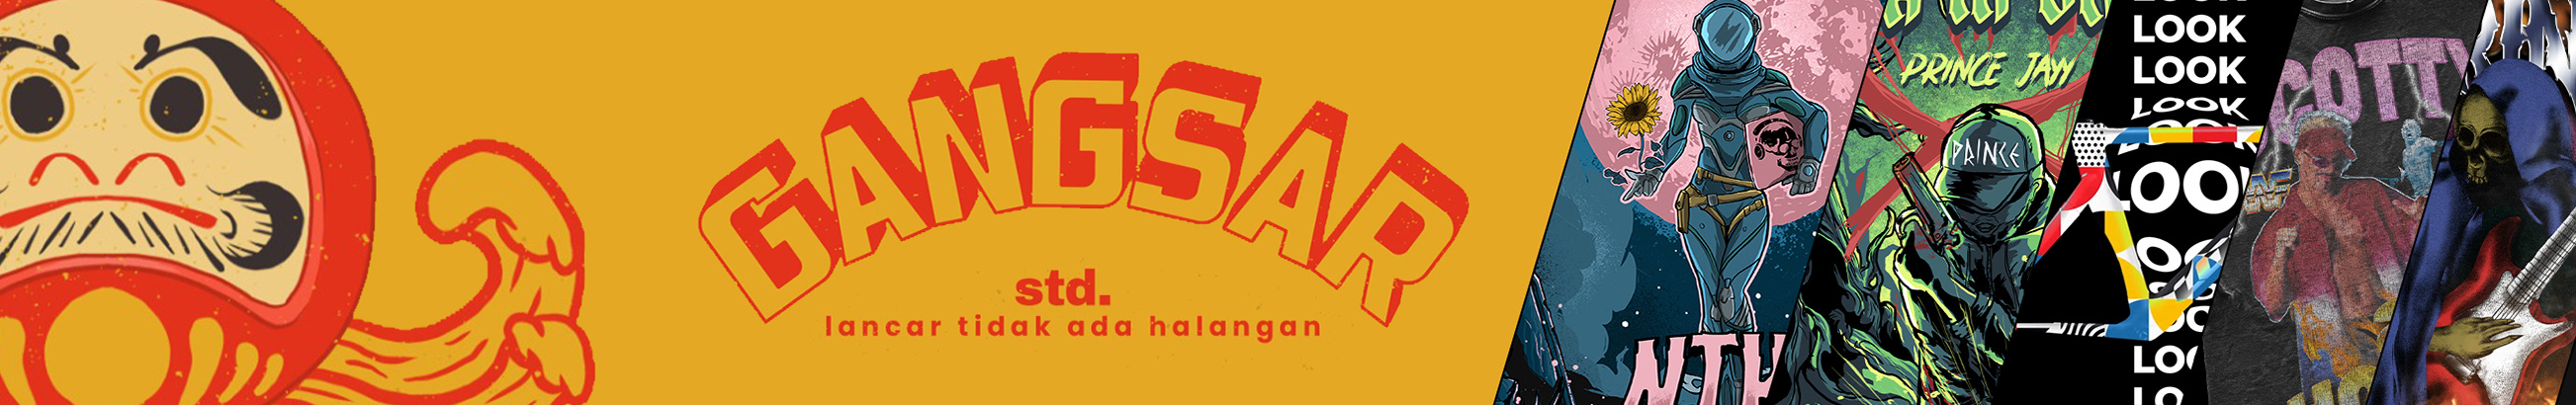 GANGSAR Studio's profile banner